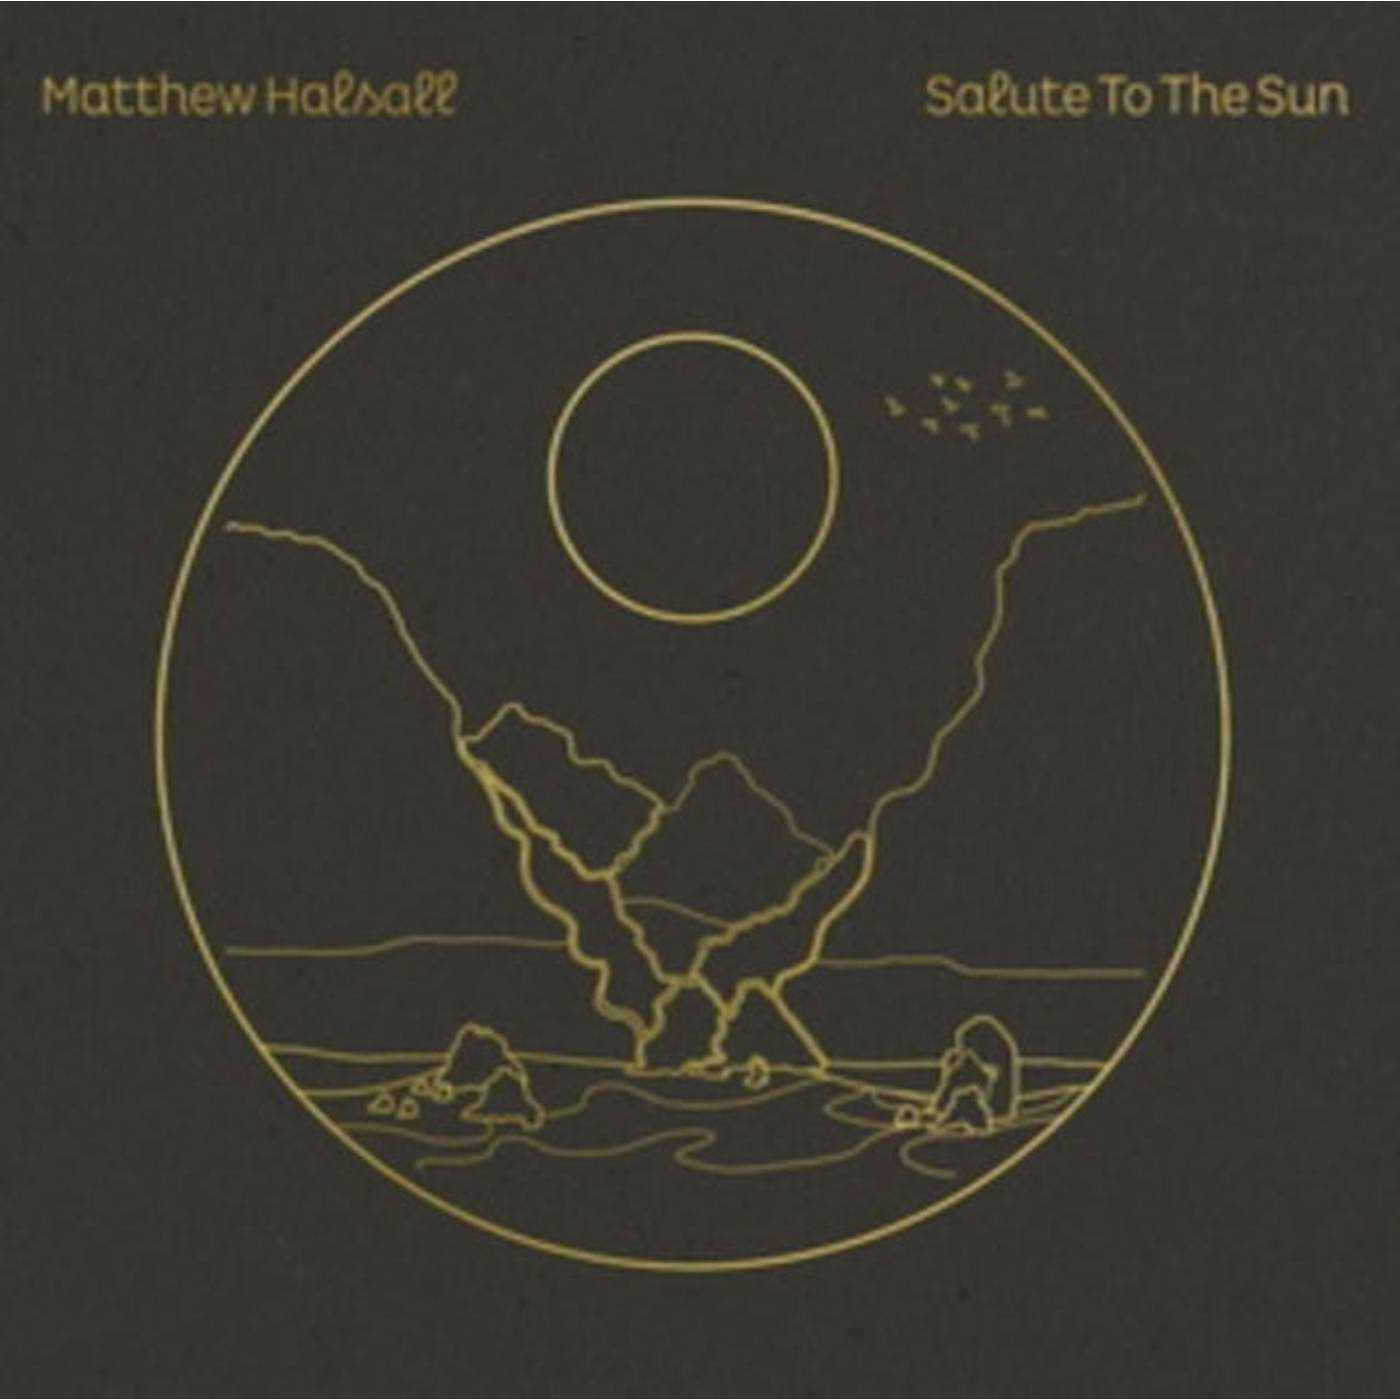 Matthew Halsall LP Vinyl Record - Salute To The Sun